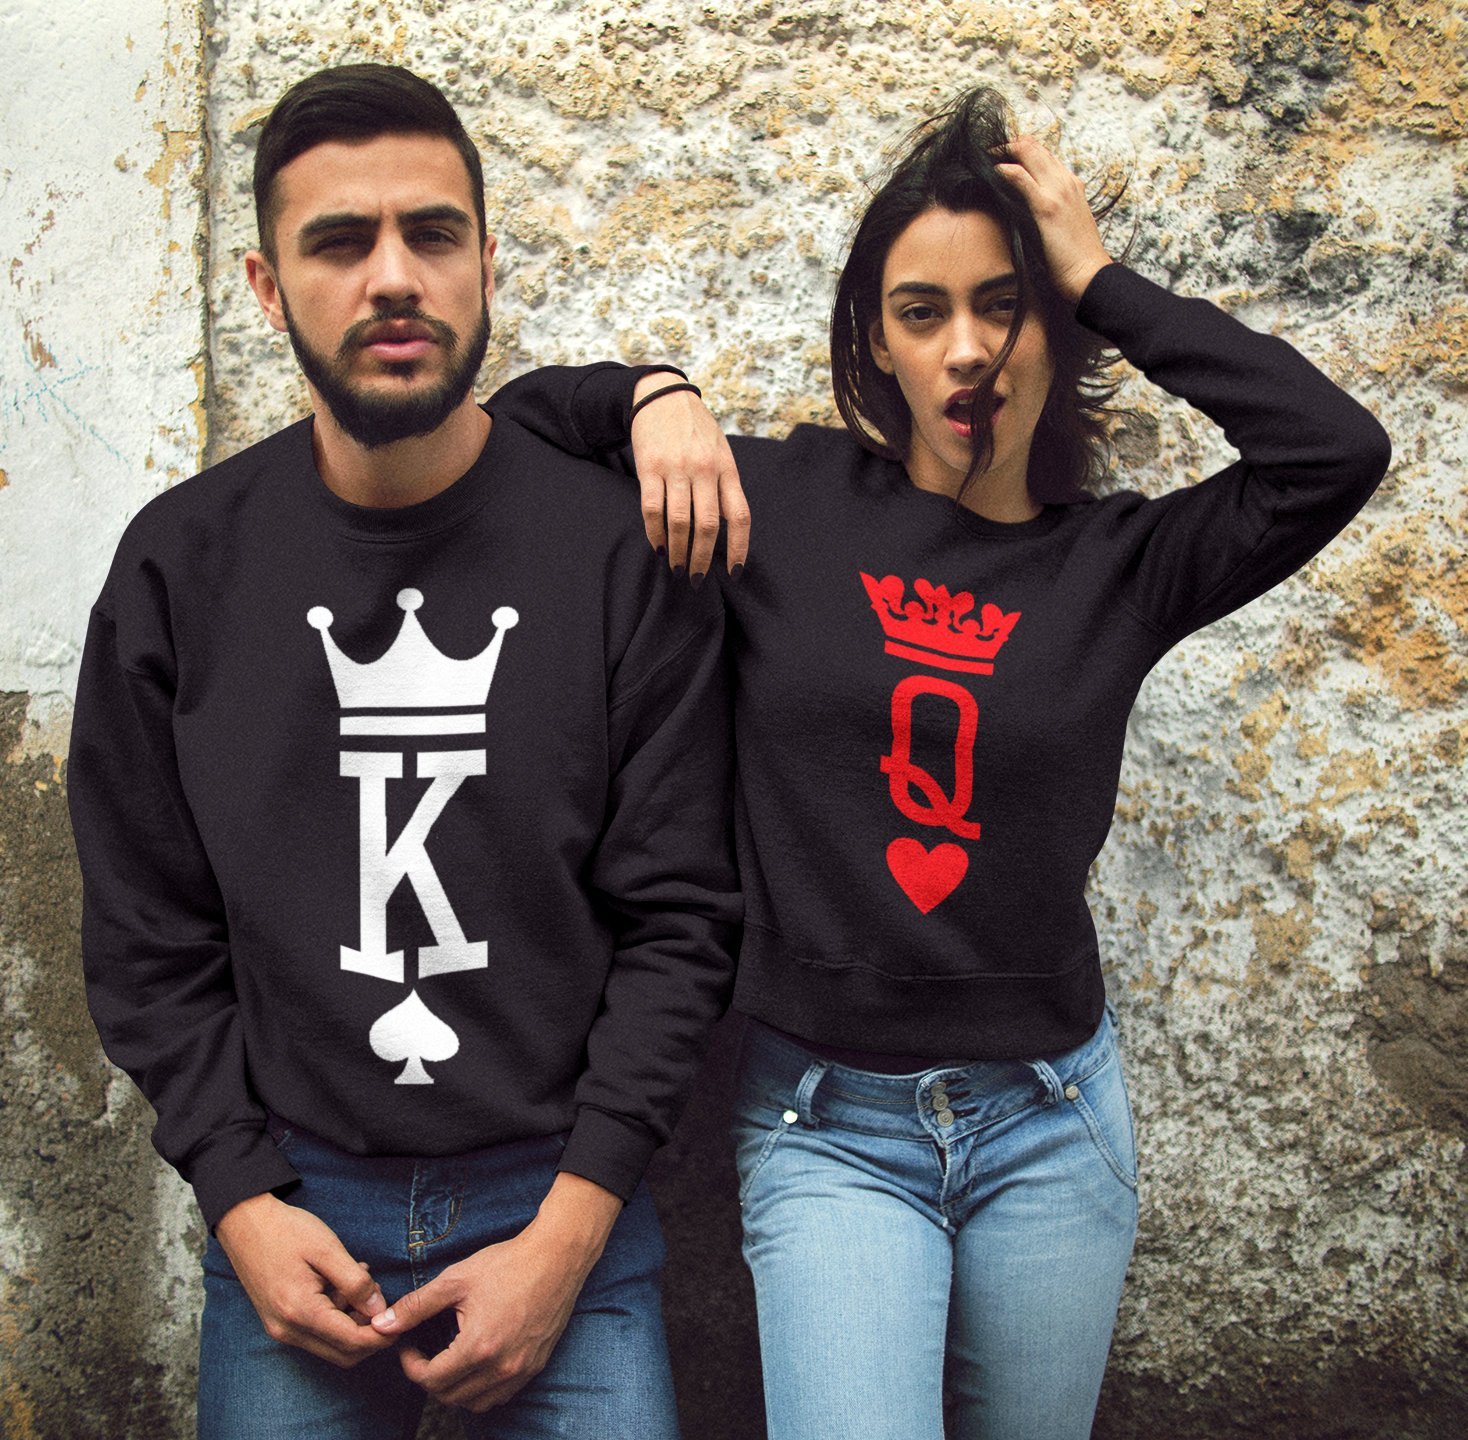 K - Q - Cute Couple Hoodies For Sweatshirts And Wife – The Tee Shop